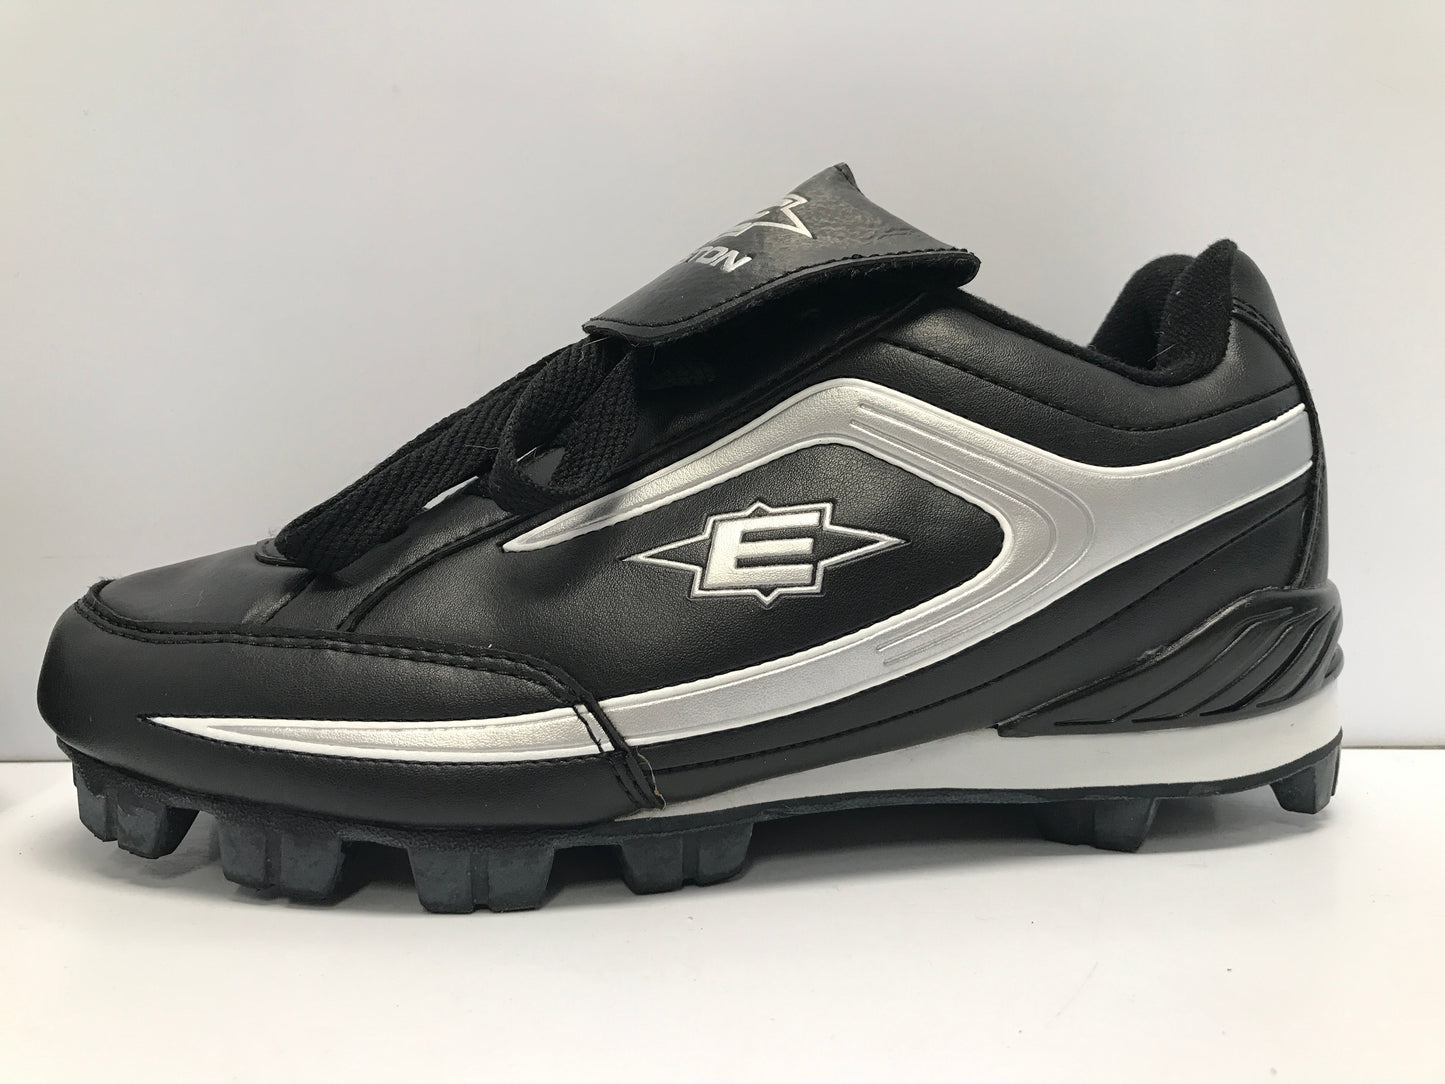 Baseball Shoes Cleats Men's Size 6 Easton Black Grey Like New